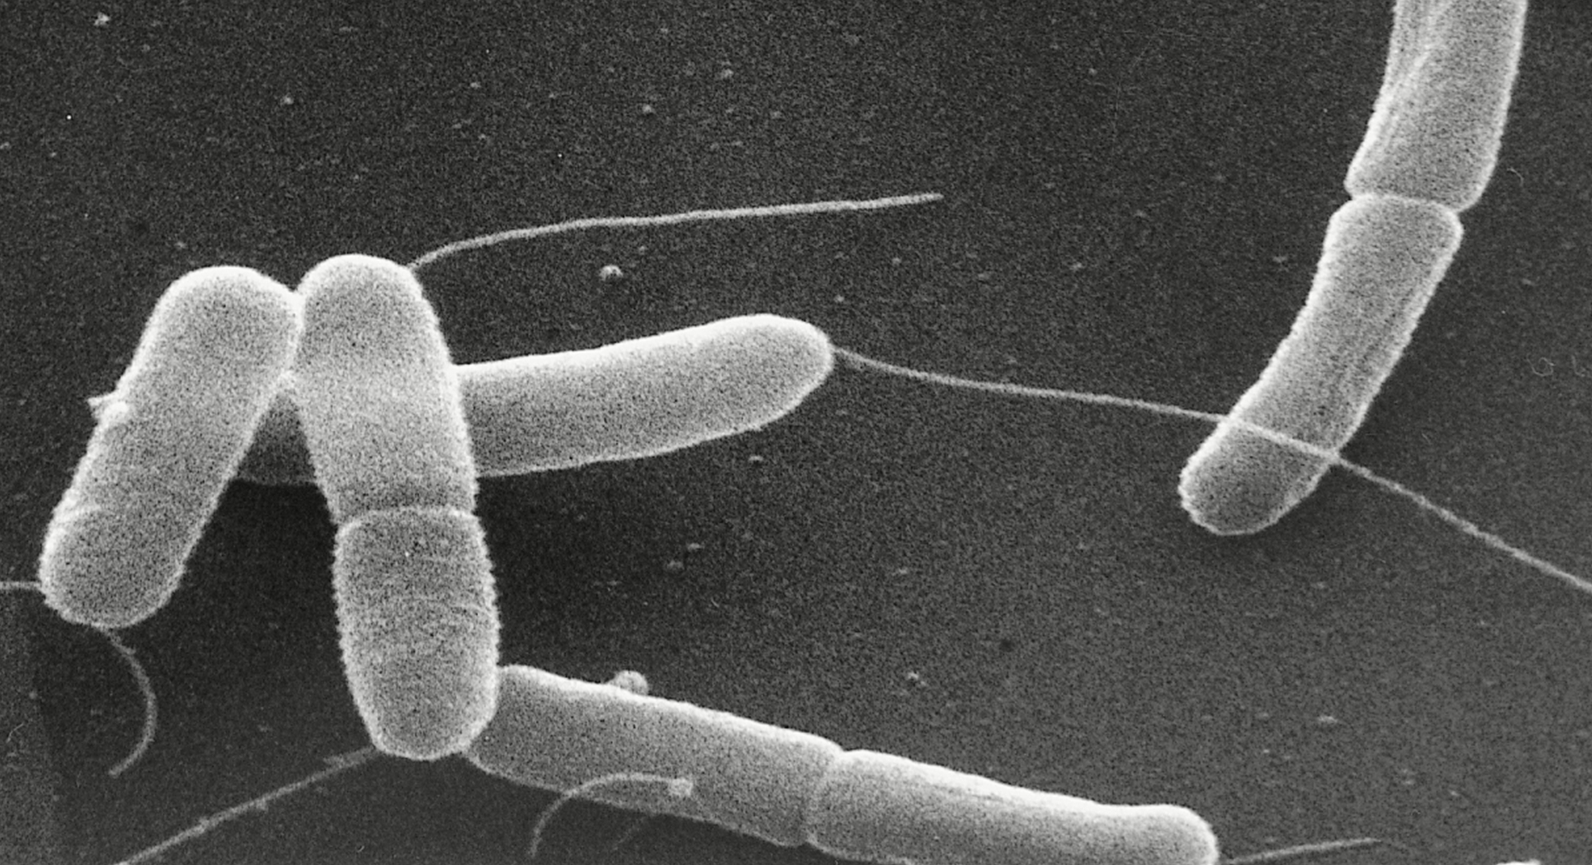 Enterotoxigenic bacteria undergoing Binary Fission